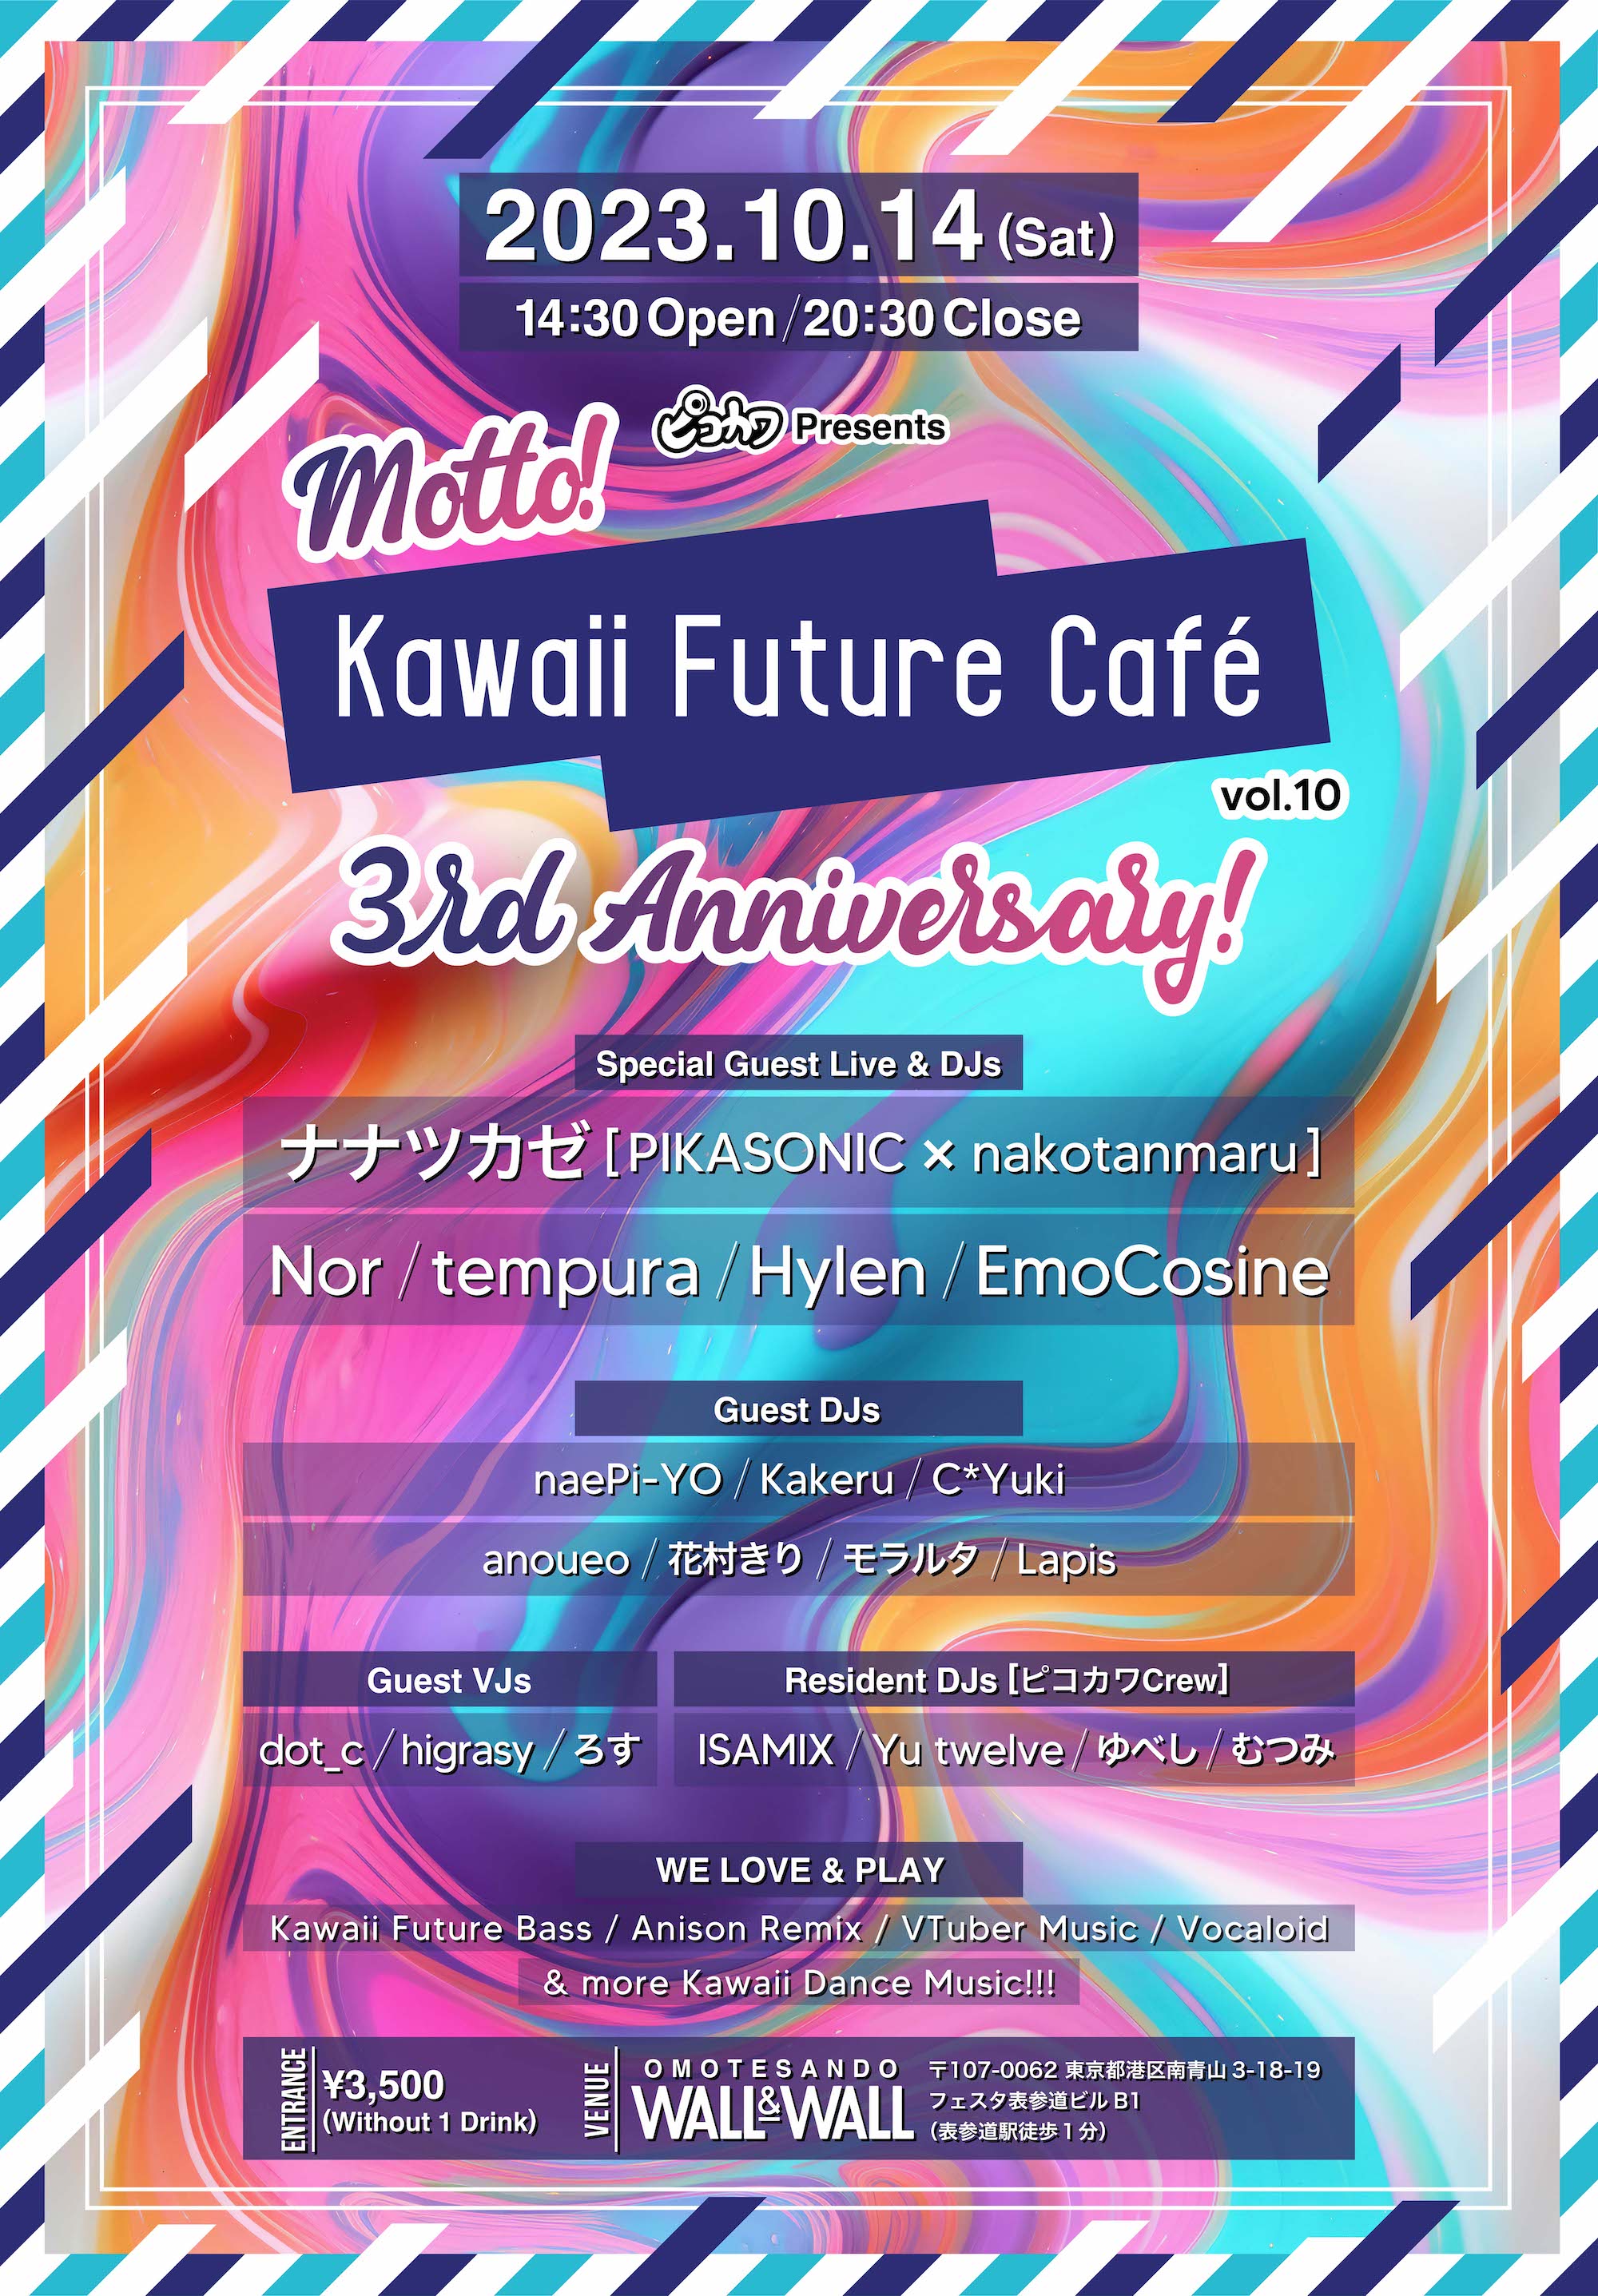 Motto! Kawaii Future Cafe